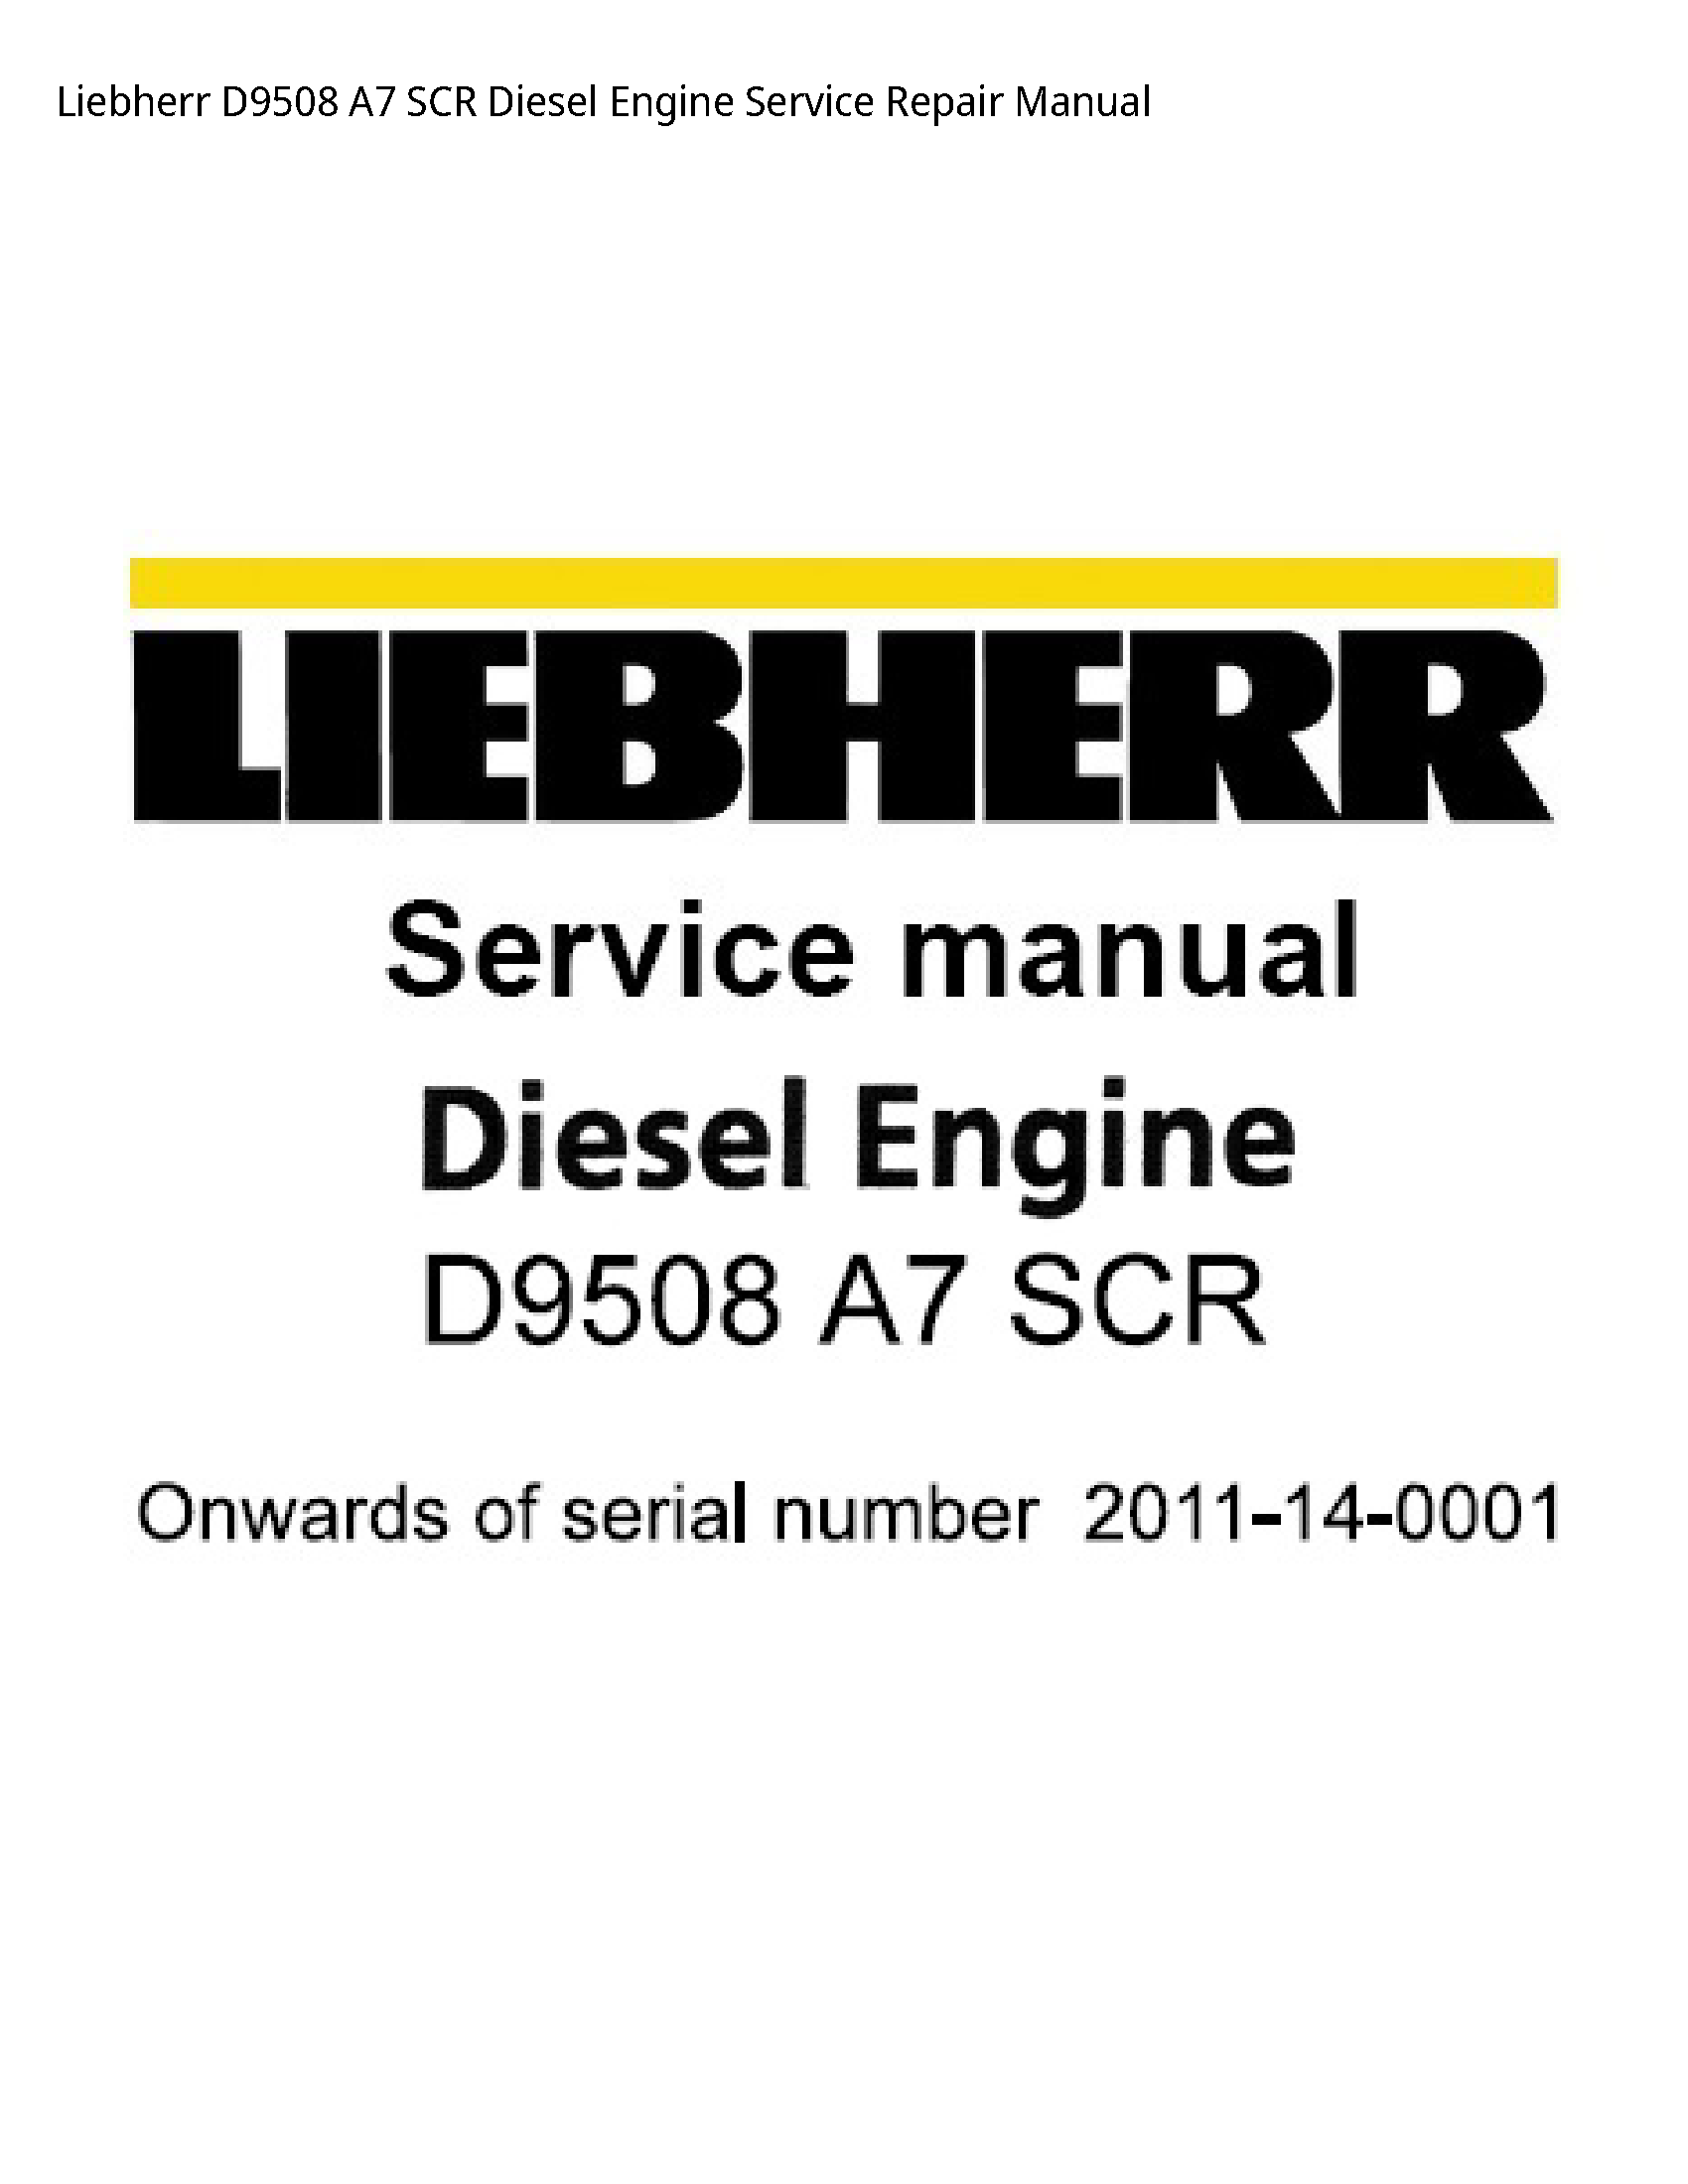 Liebherr D9508 SCR Diesel Engine manual